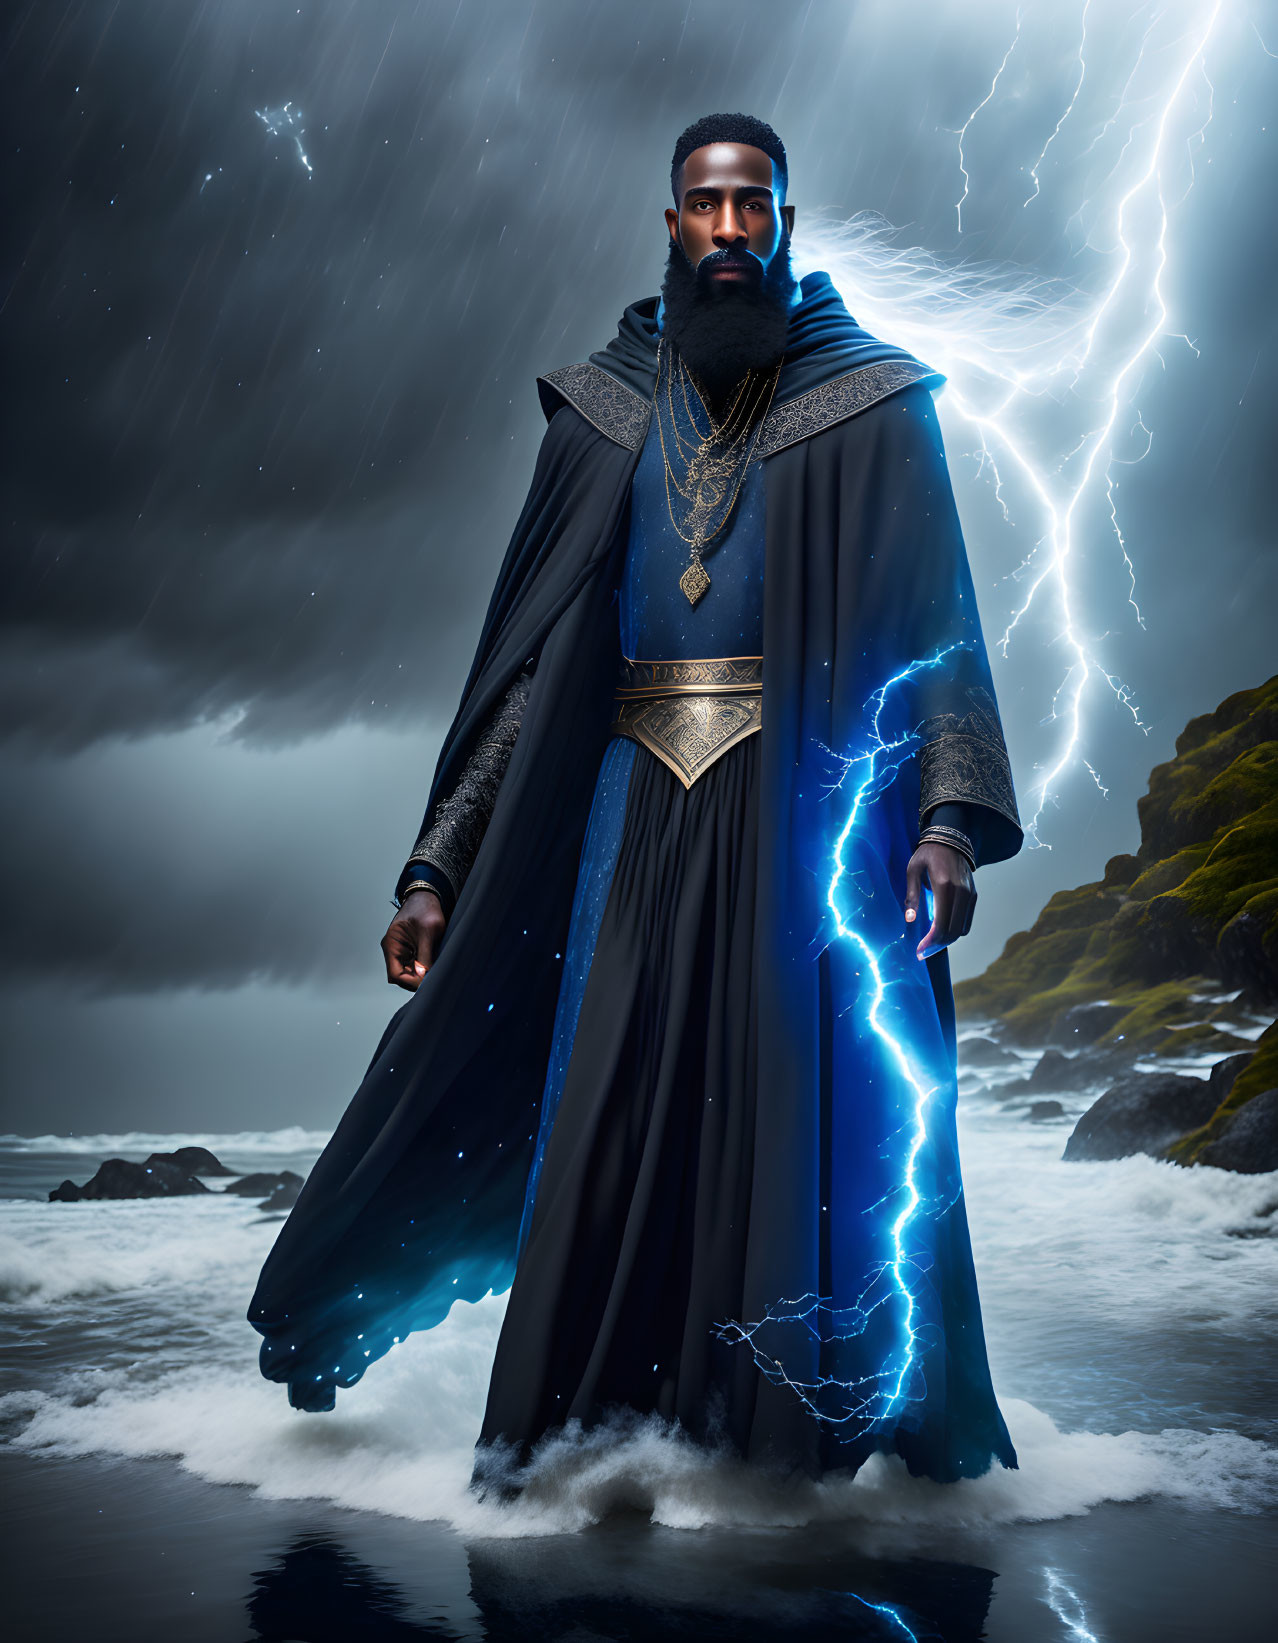 Majestic figure in dark blue cloak with lightning motifs on stormy shore